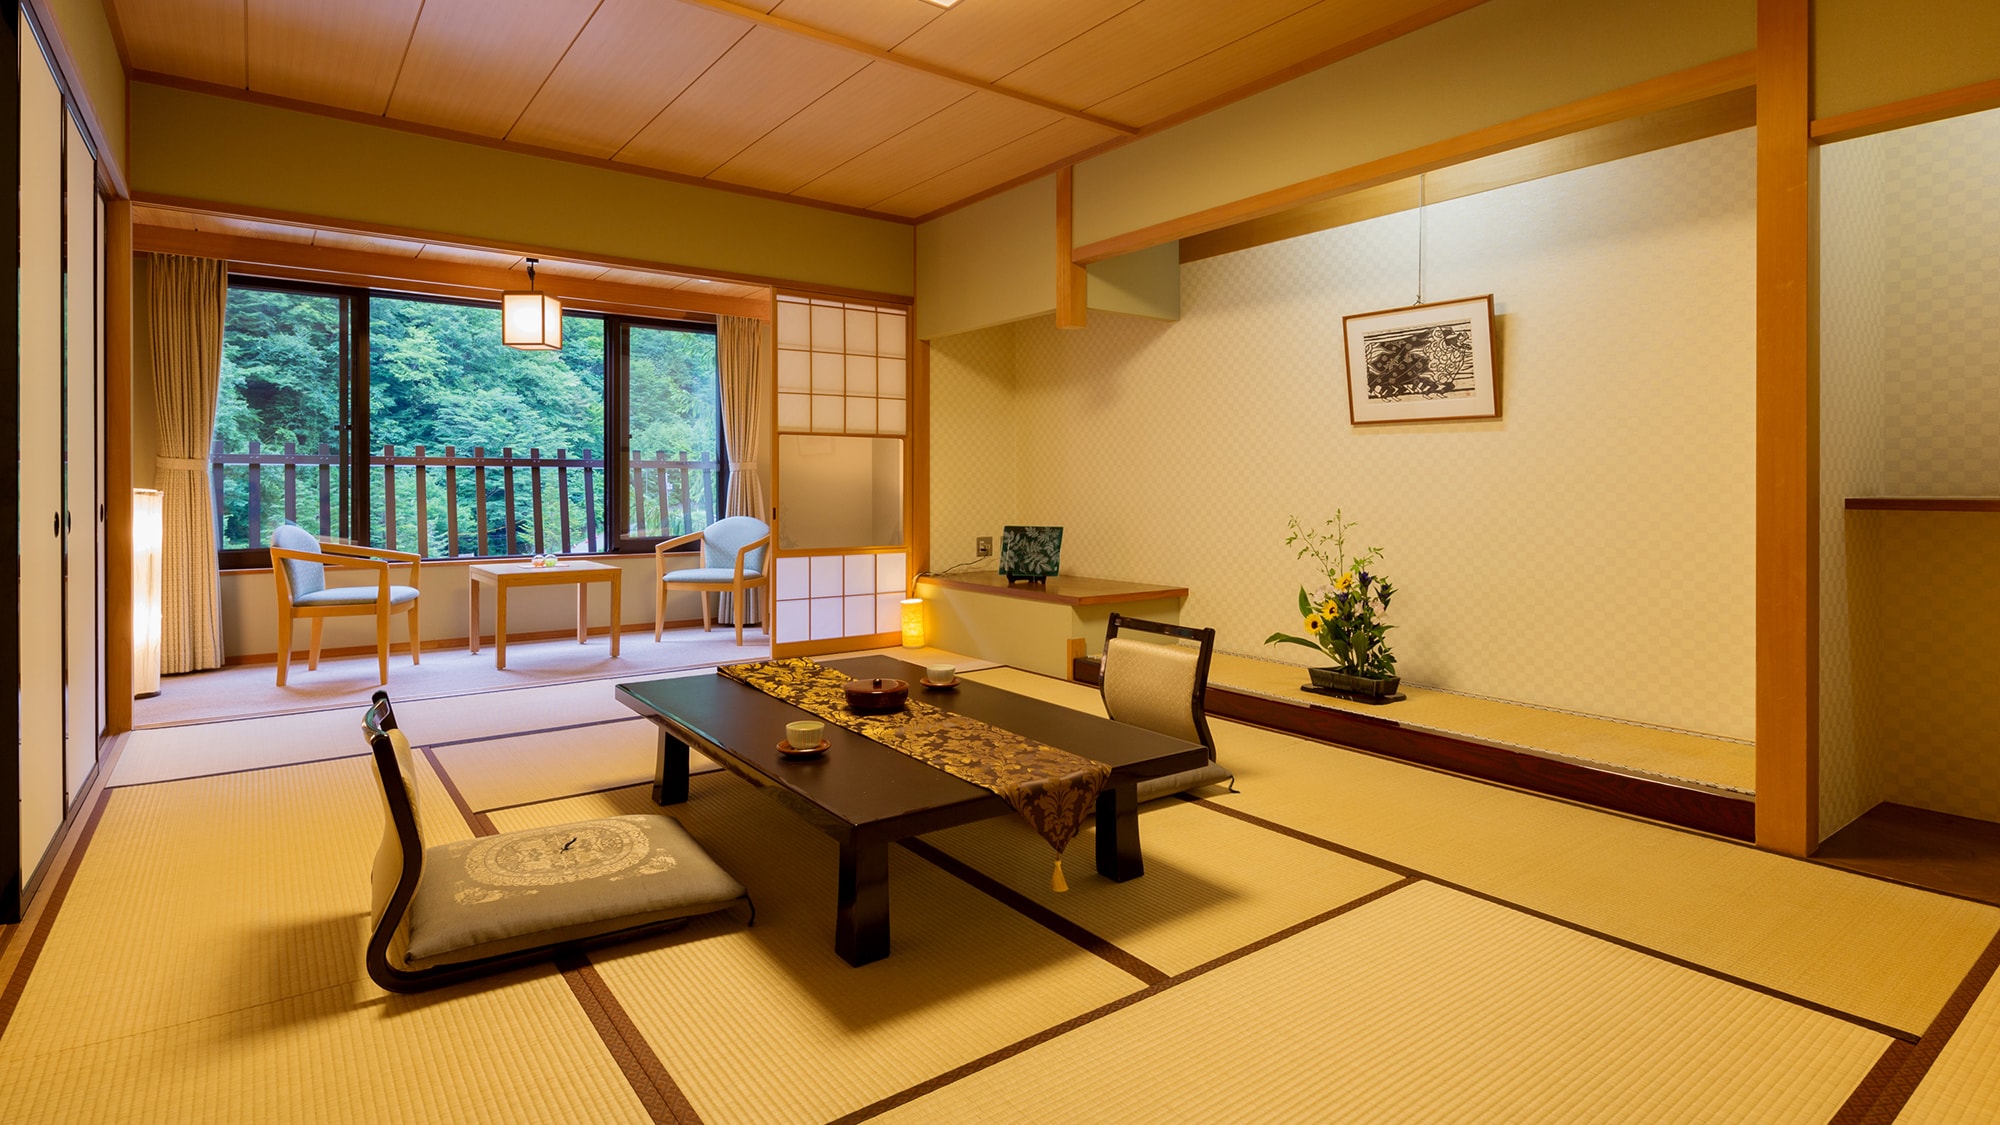 ■ 12-tatami mat Japanese-style room ■